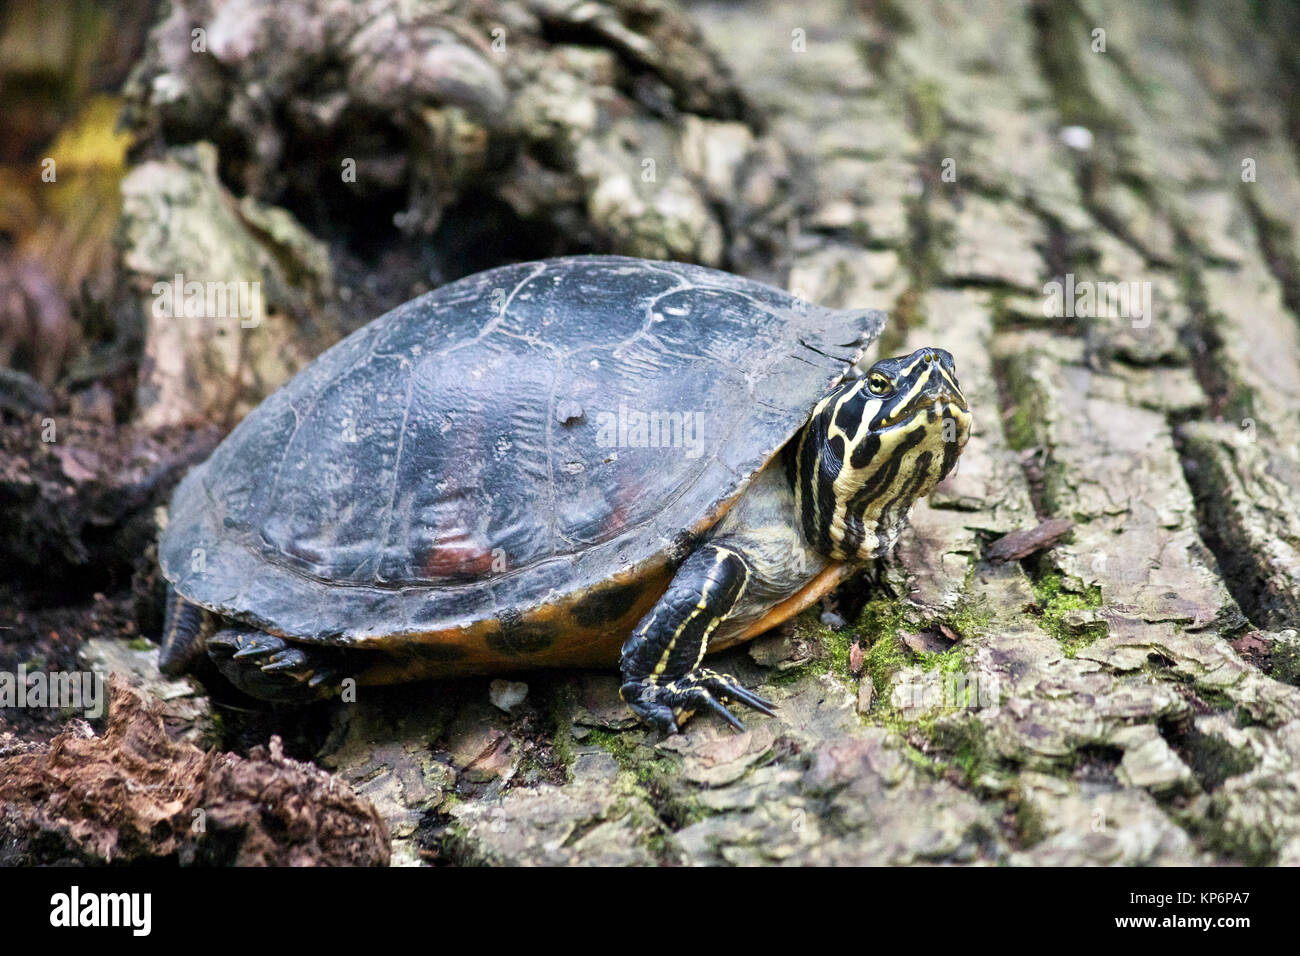 Yellow-bellied slider (Trachemys scripta scripta) turtle. Stock Photo